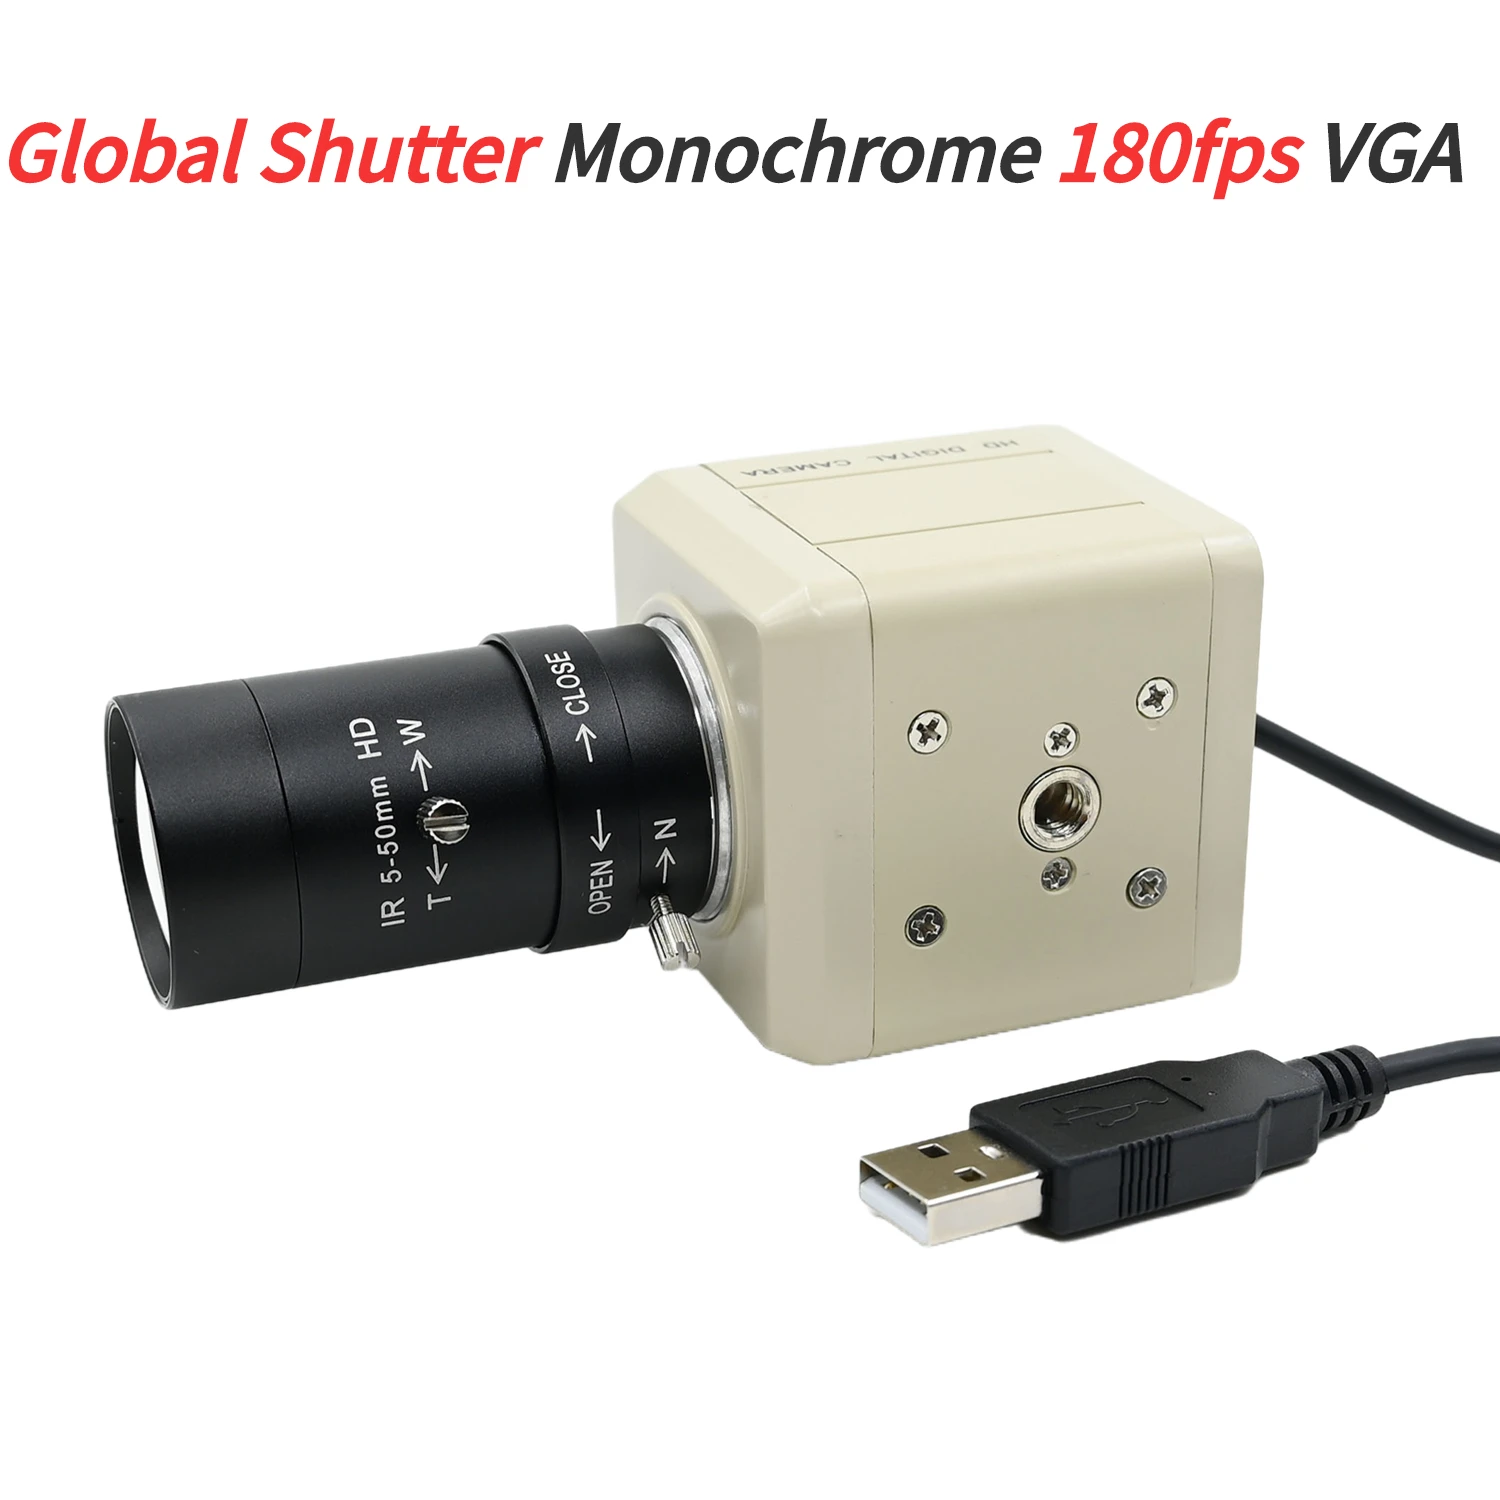 

180FPS Global Shutter USB Camera VGA,640x480,Monochrome Box Webcam, With 5-50mm 2.8-12mm Varifocal CS Lens,High Speed Capture